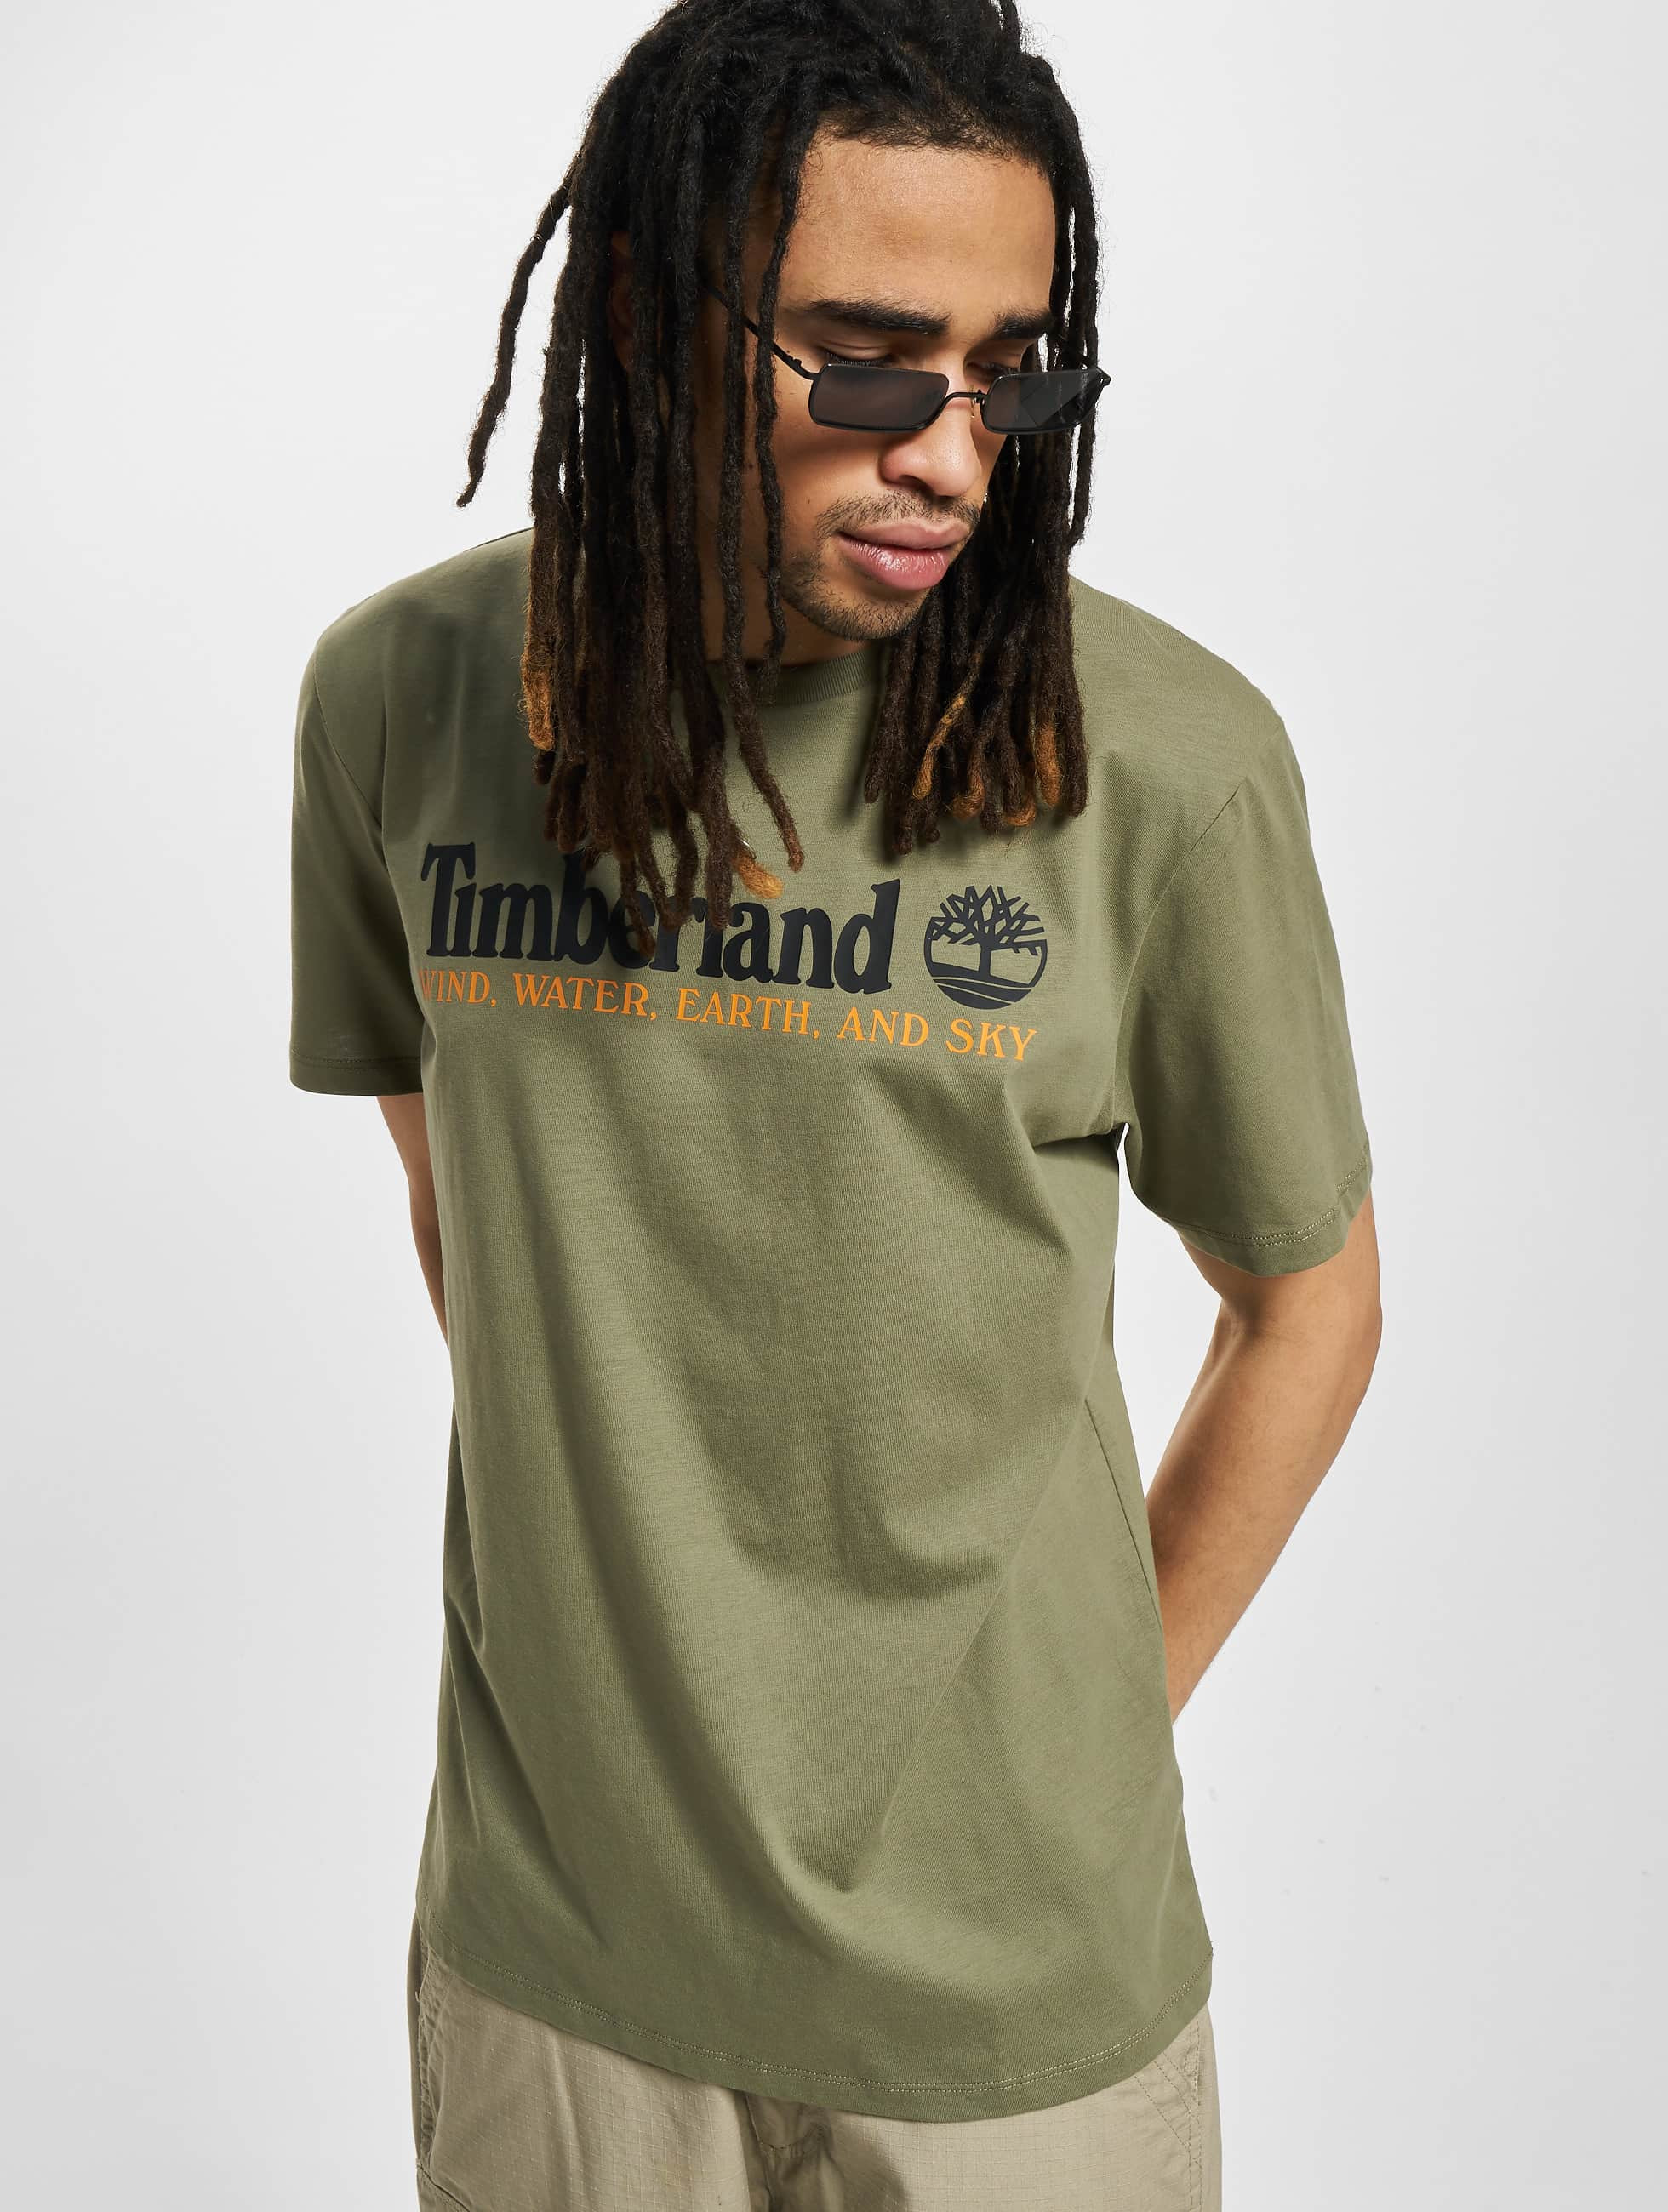 desastre valor Especialidad Timberland Ropa superiór / Camiseta Front en oliva 985029